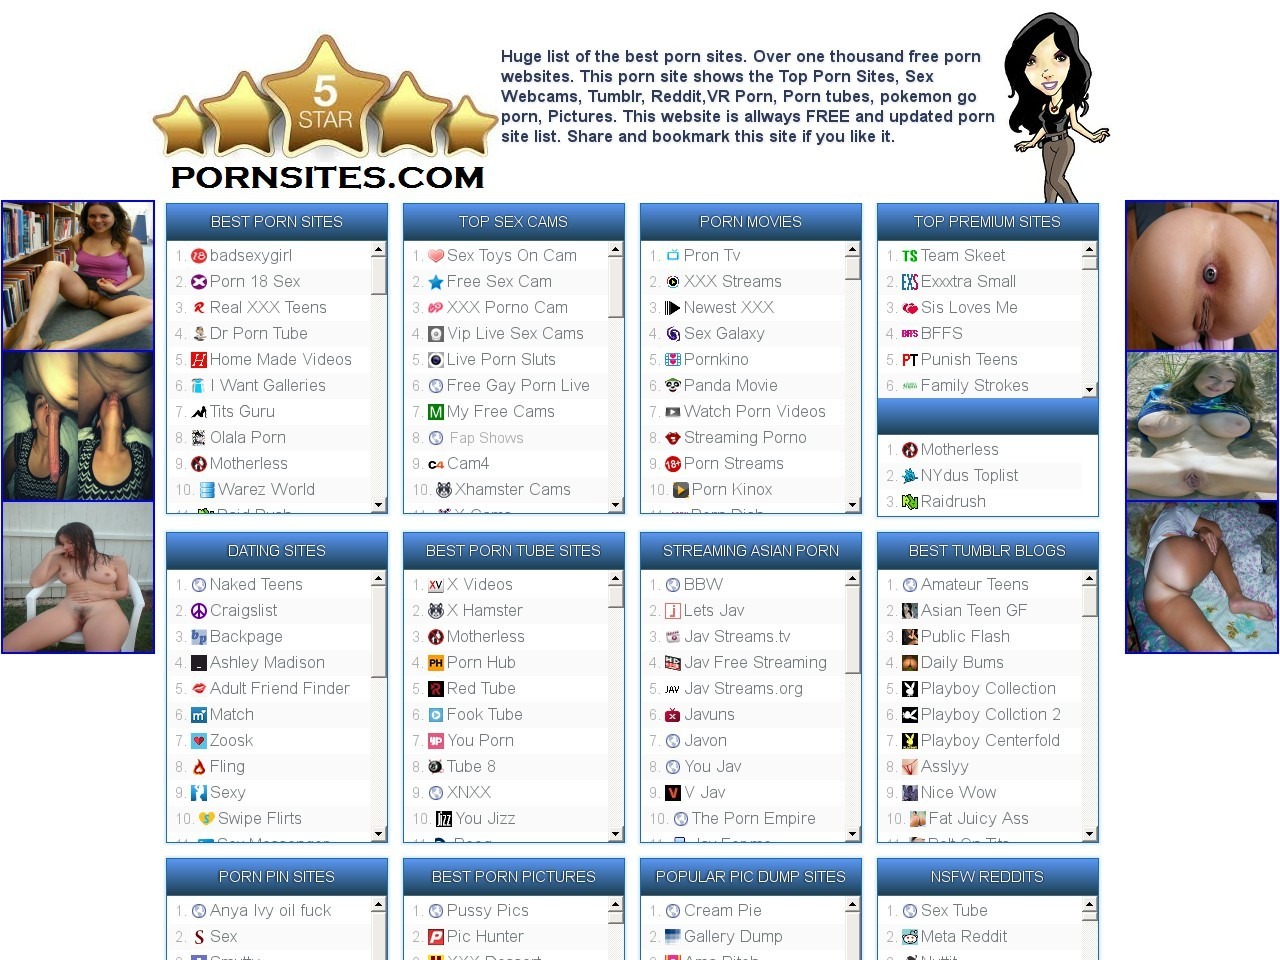 5 star porn site